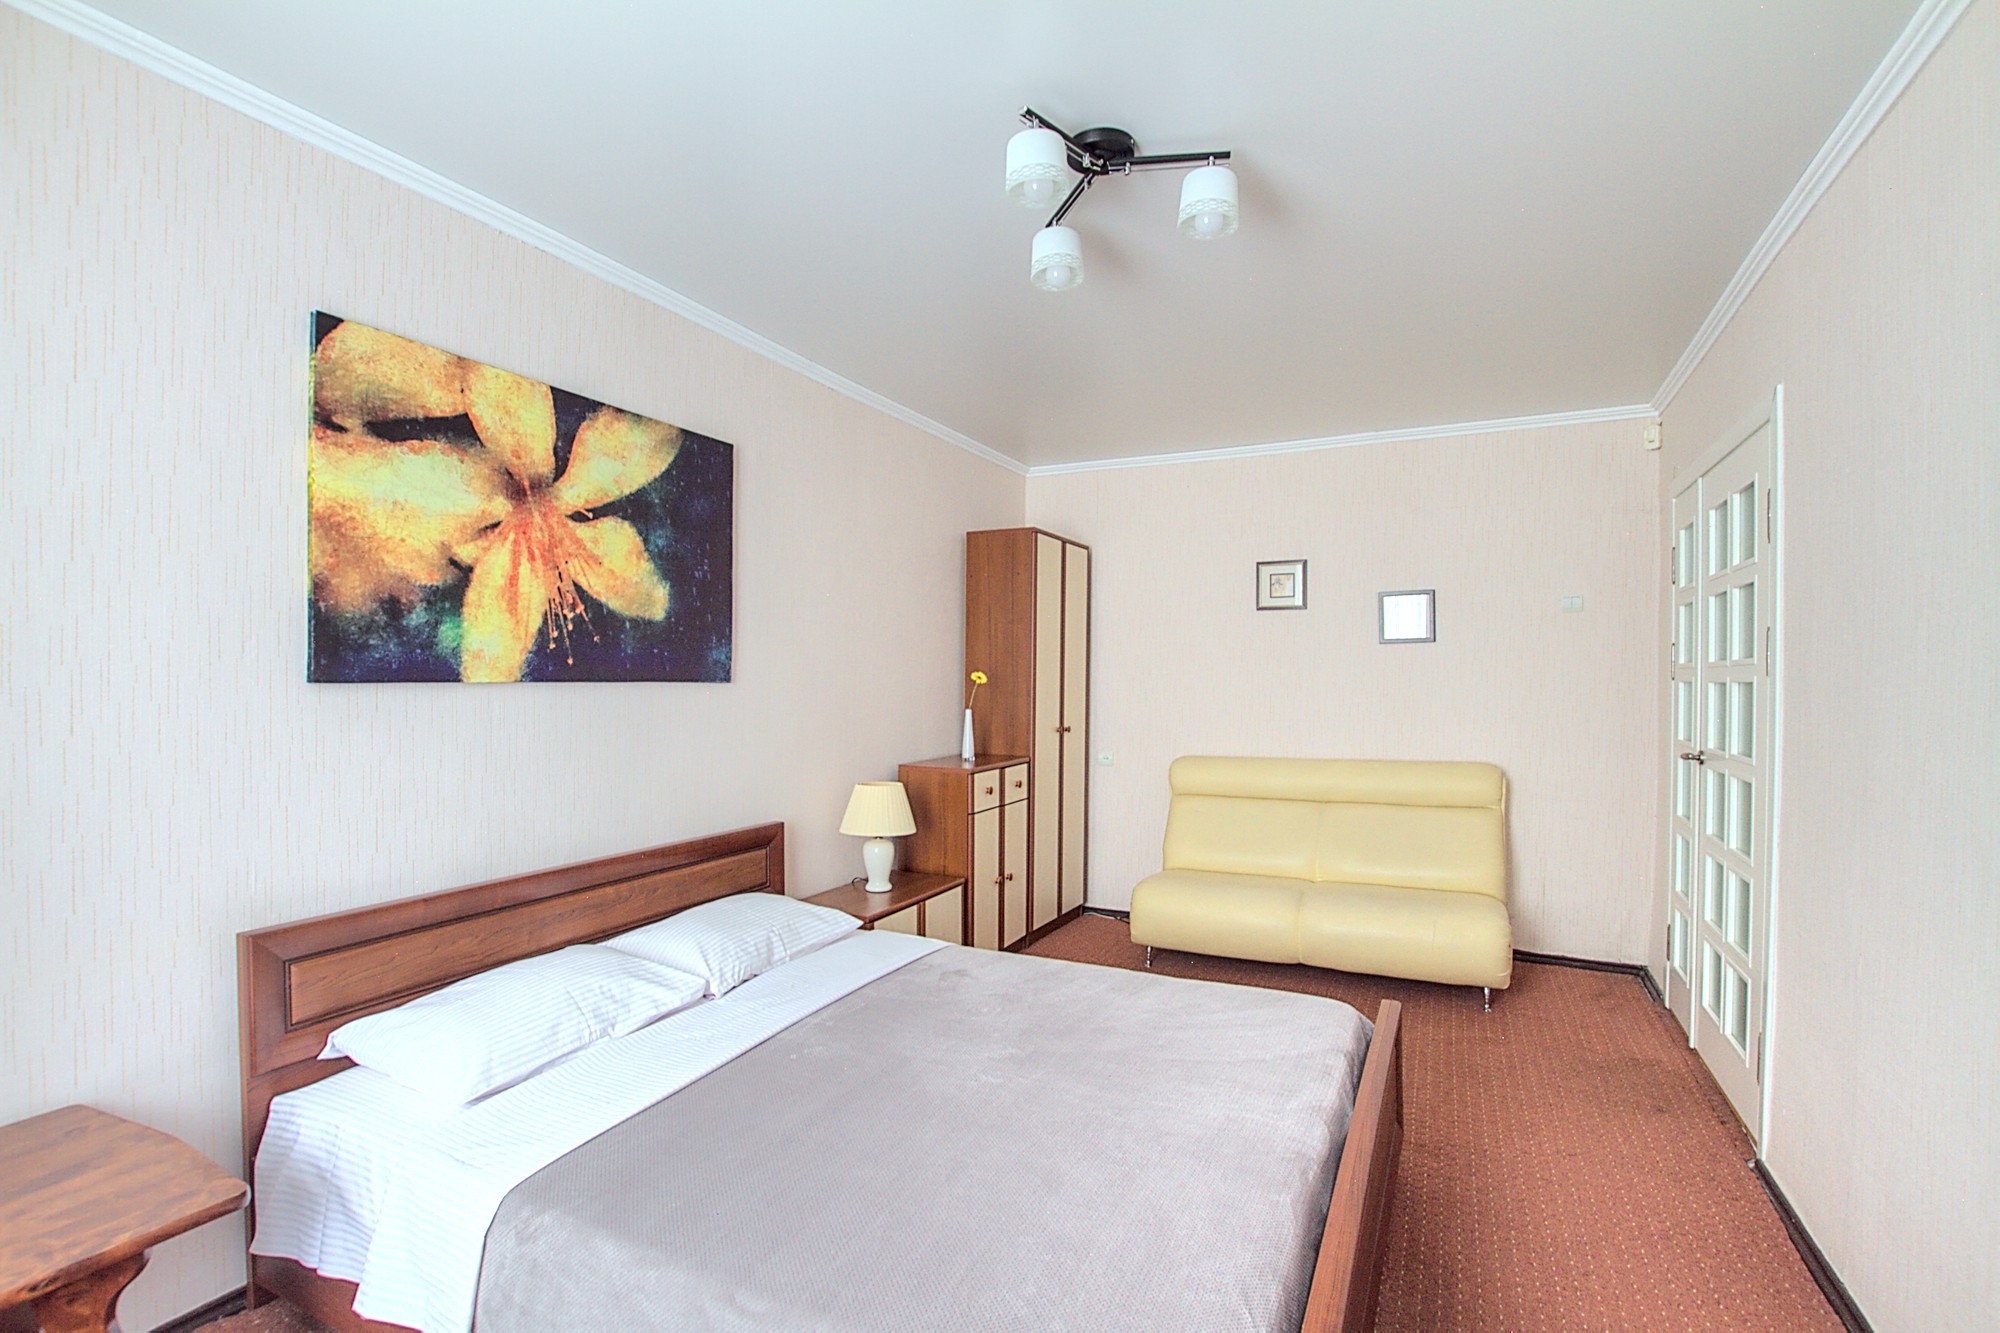 Chirie garsoniera ieftina in Chisinau: 1 cameră, 1 dormitor, 35 m²